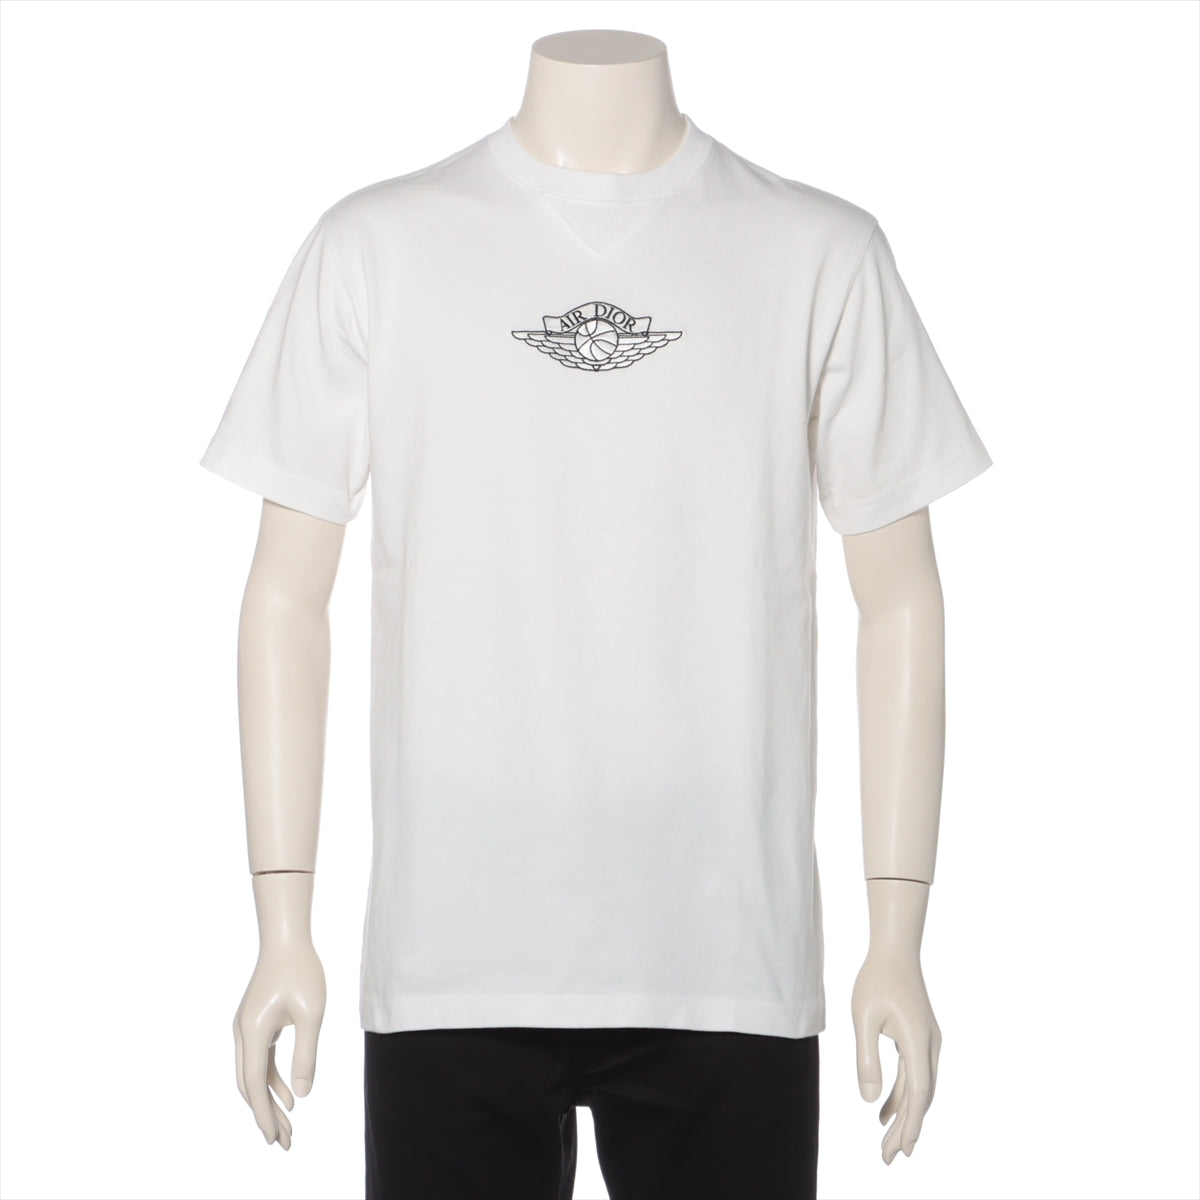 Dior x Nike Air Cotton T-shirt XS Men's White  033J625B0554 embroidery